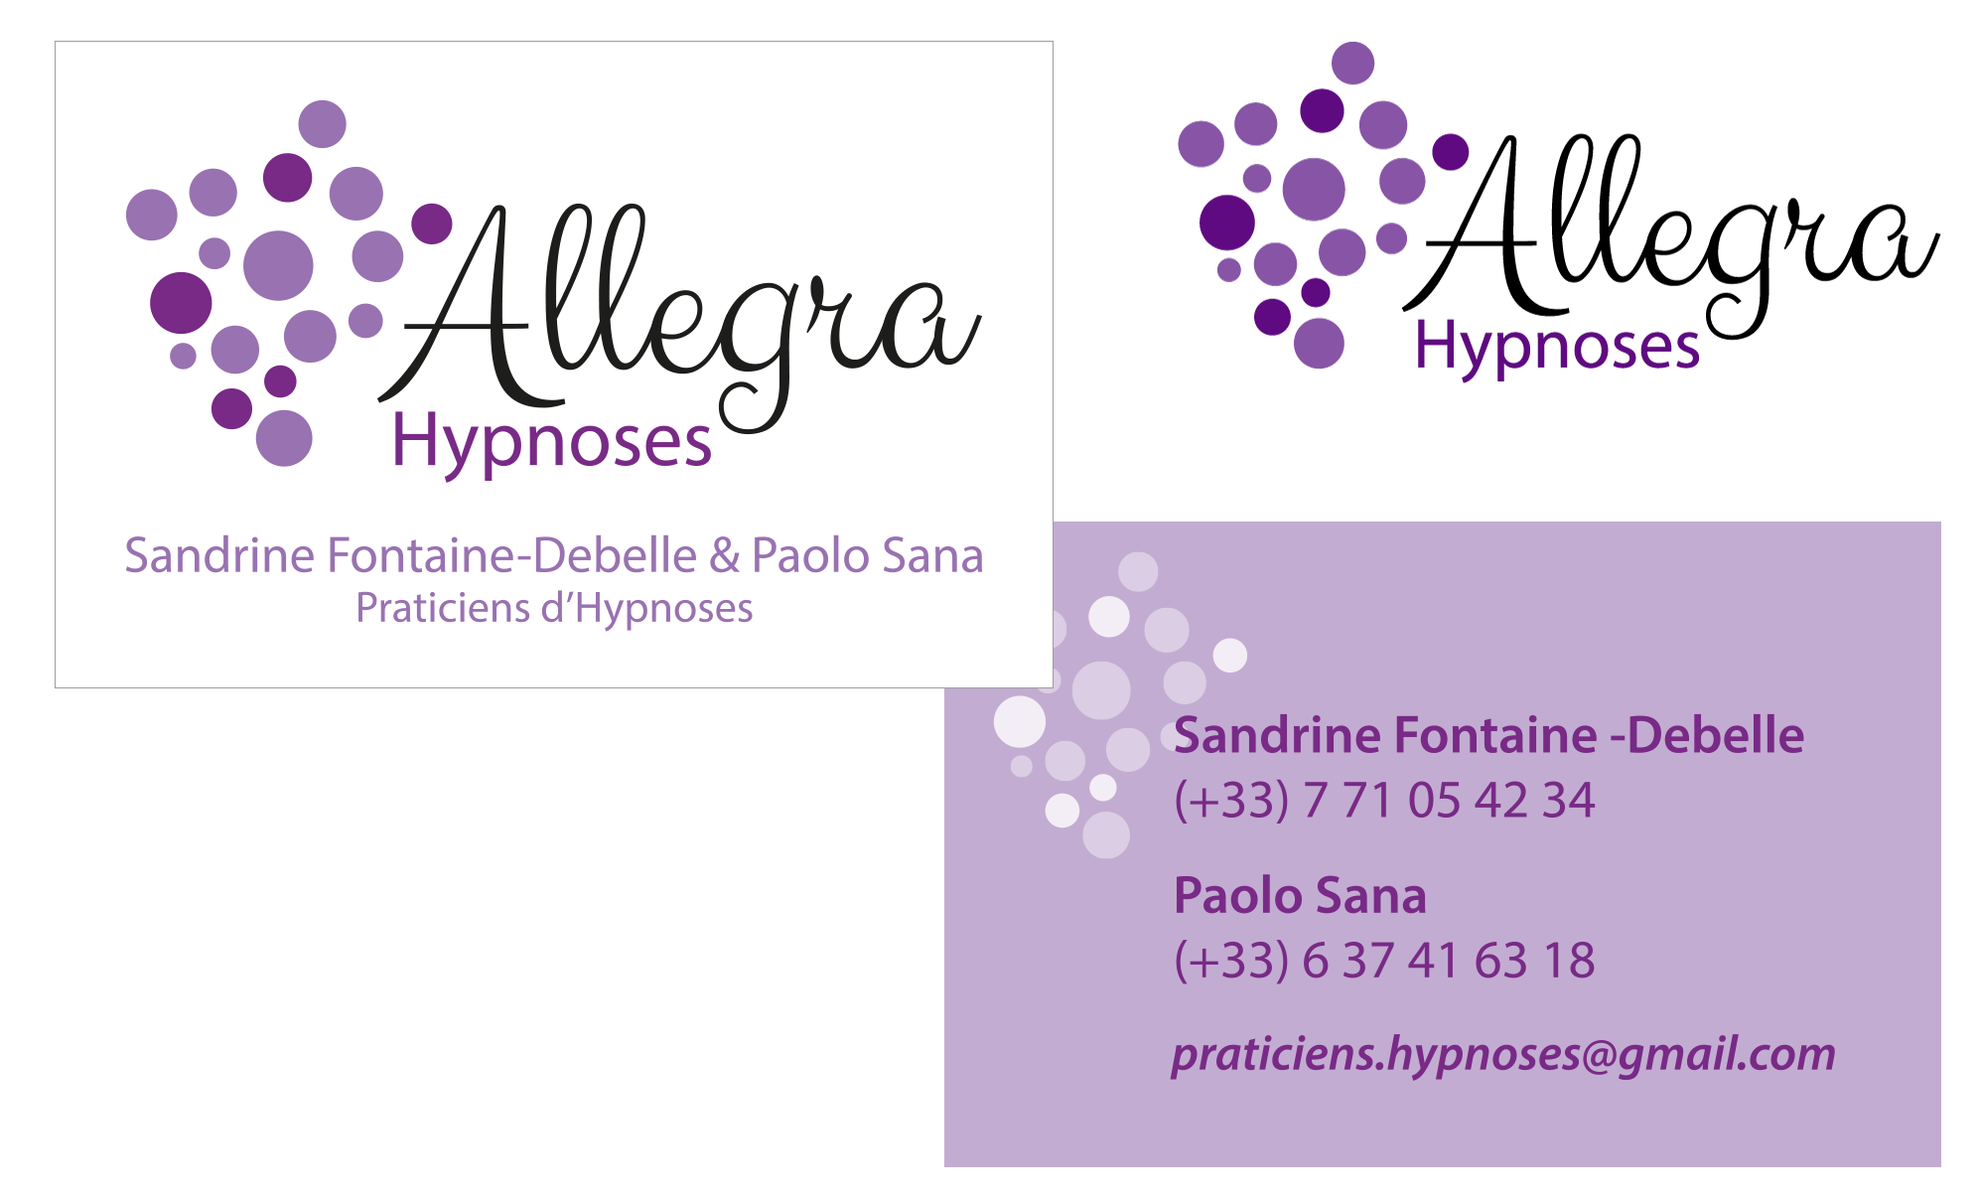 Allegra Hypnoses